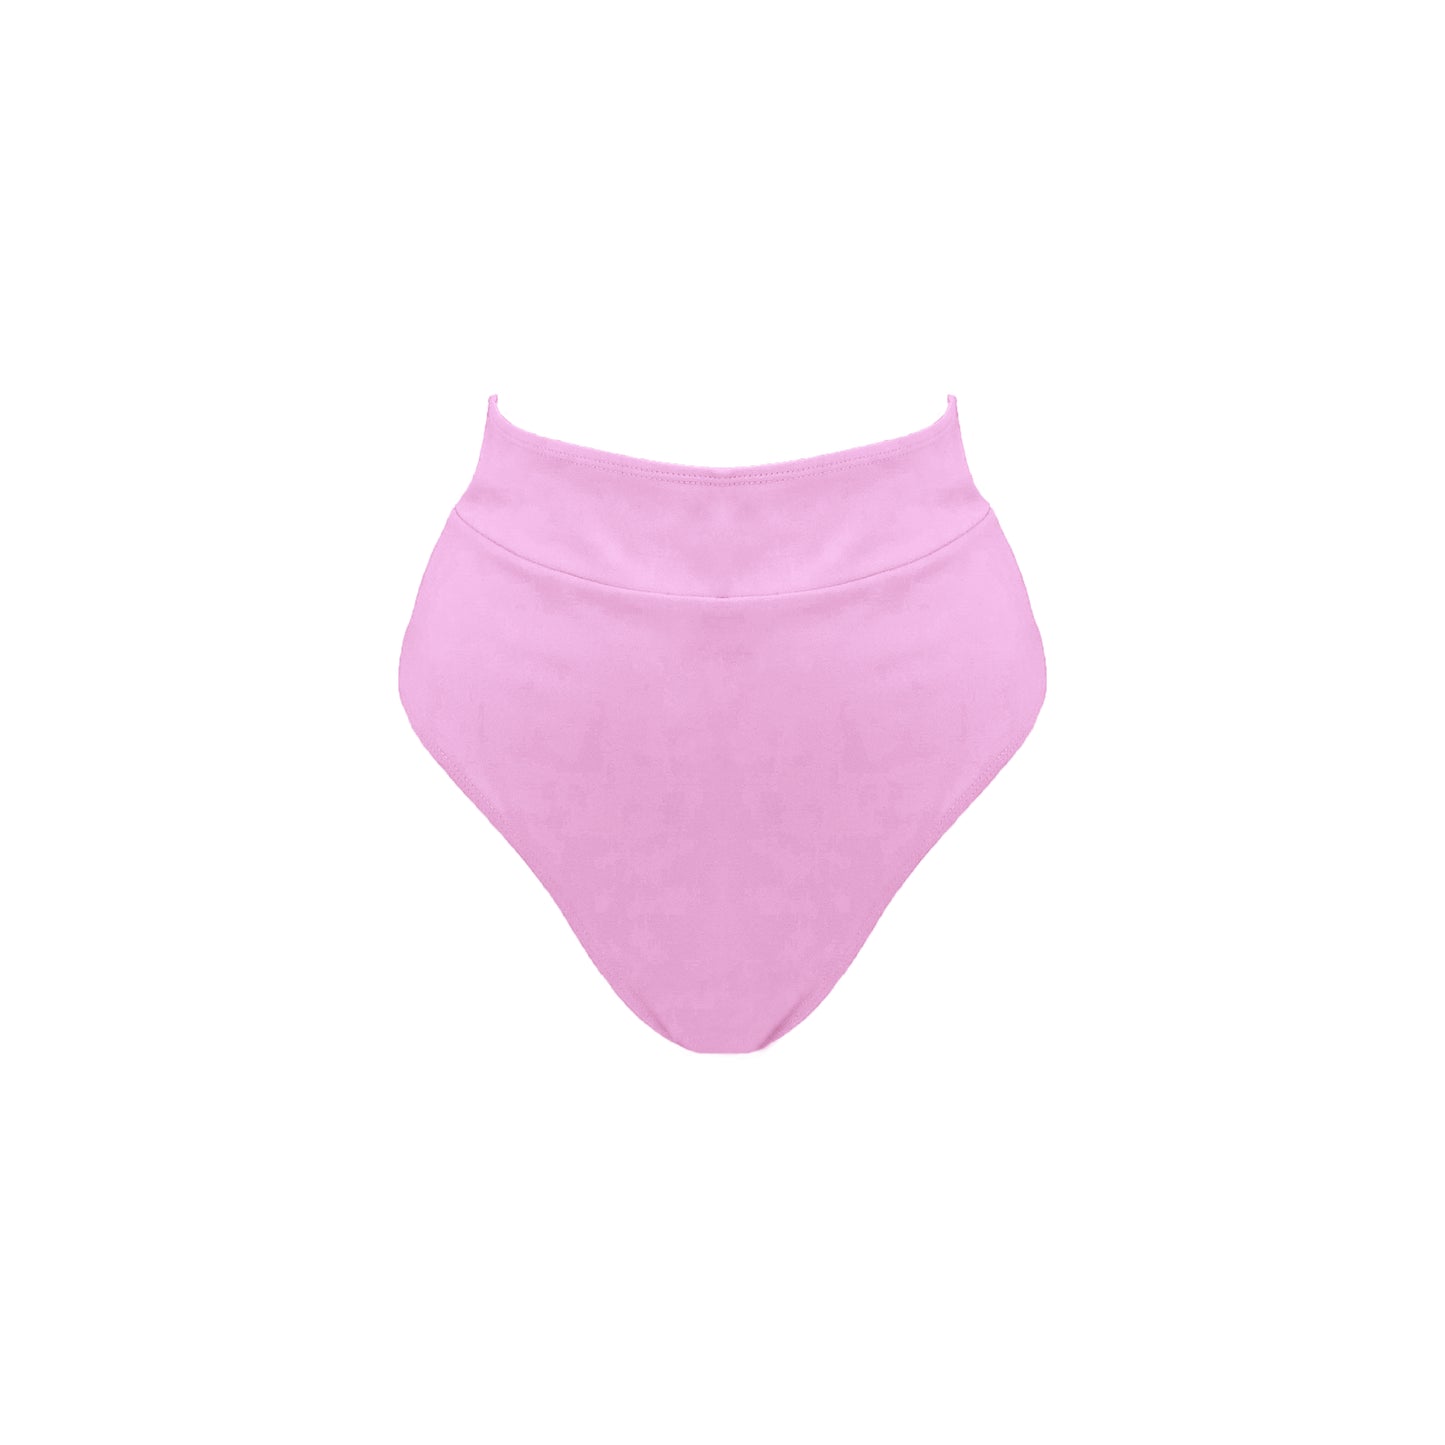 Pastel pink ultra high waist bikini bottom with banded waist, high cut legs and full bum coverage.